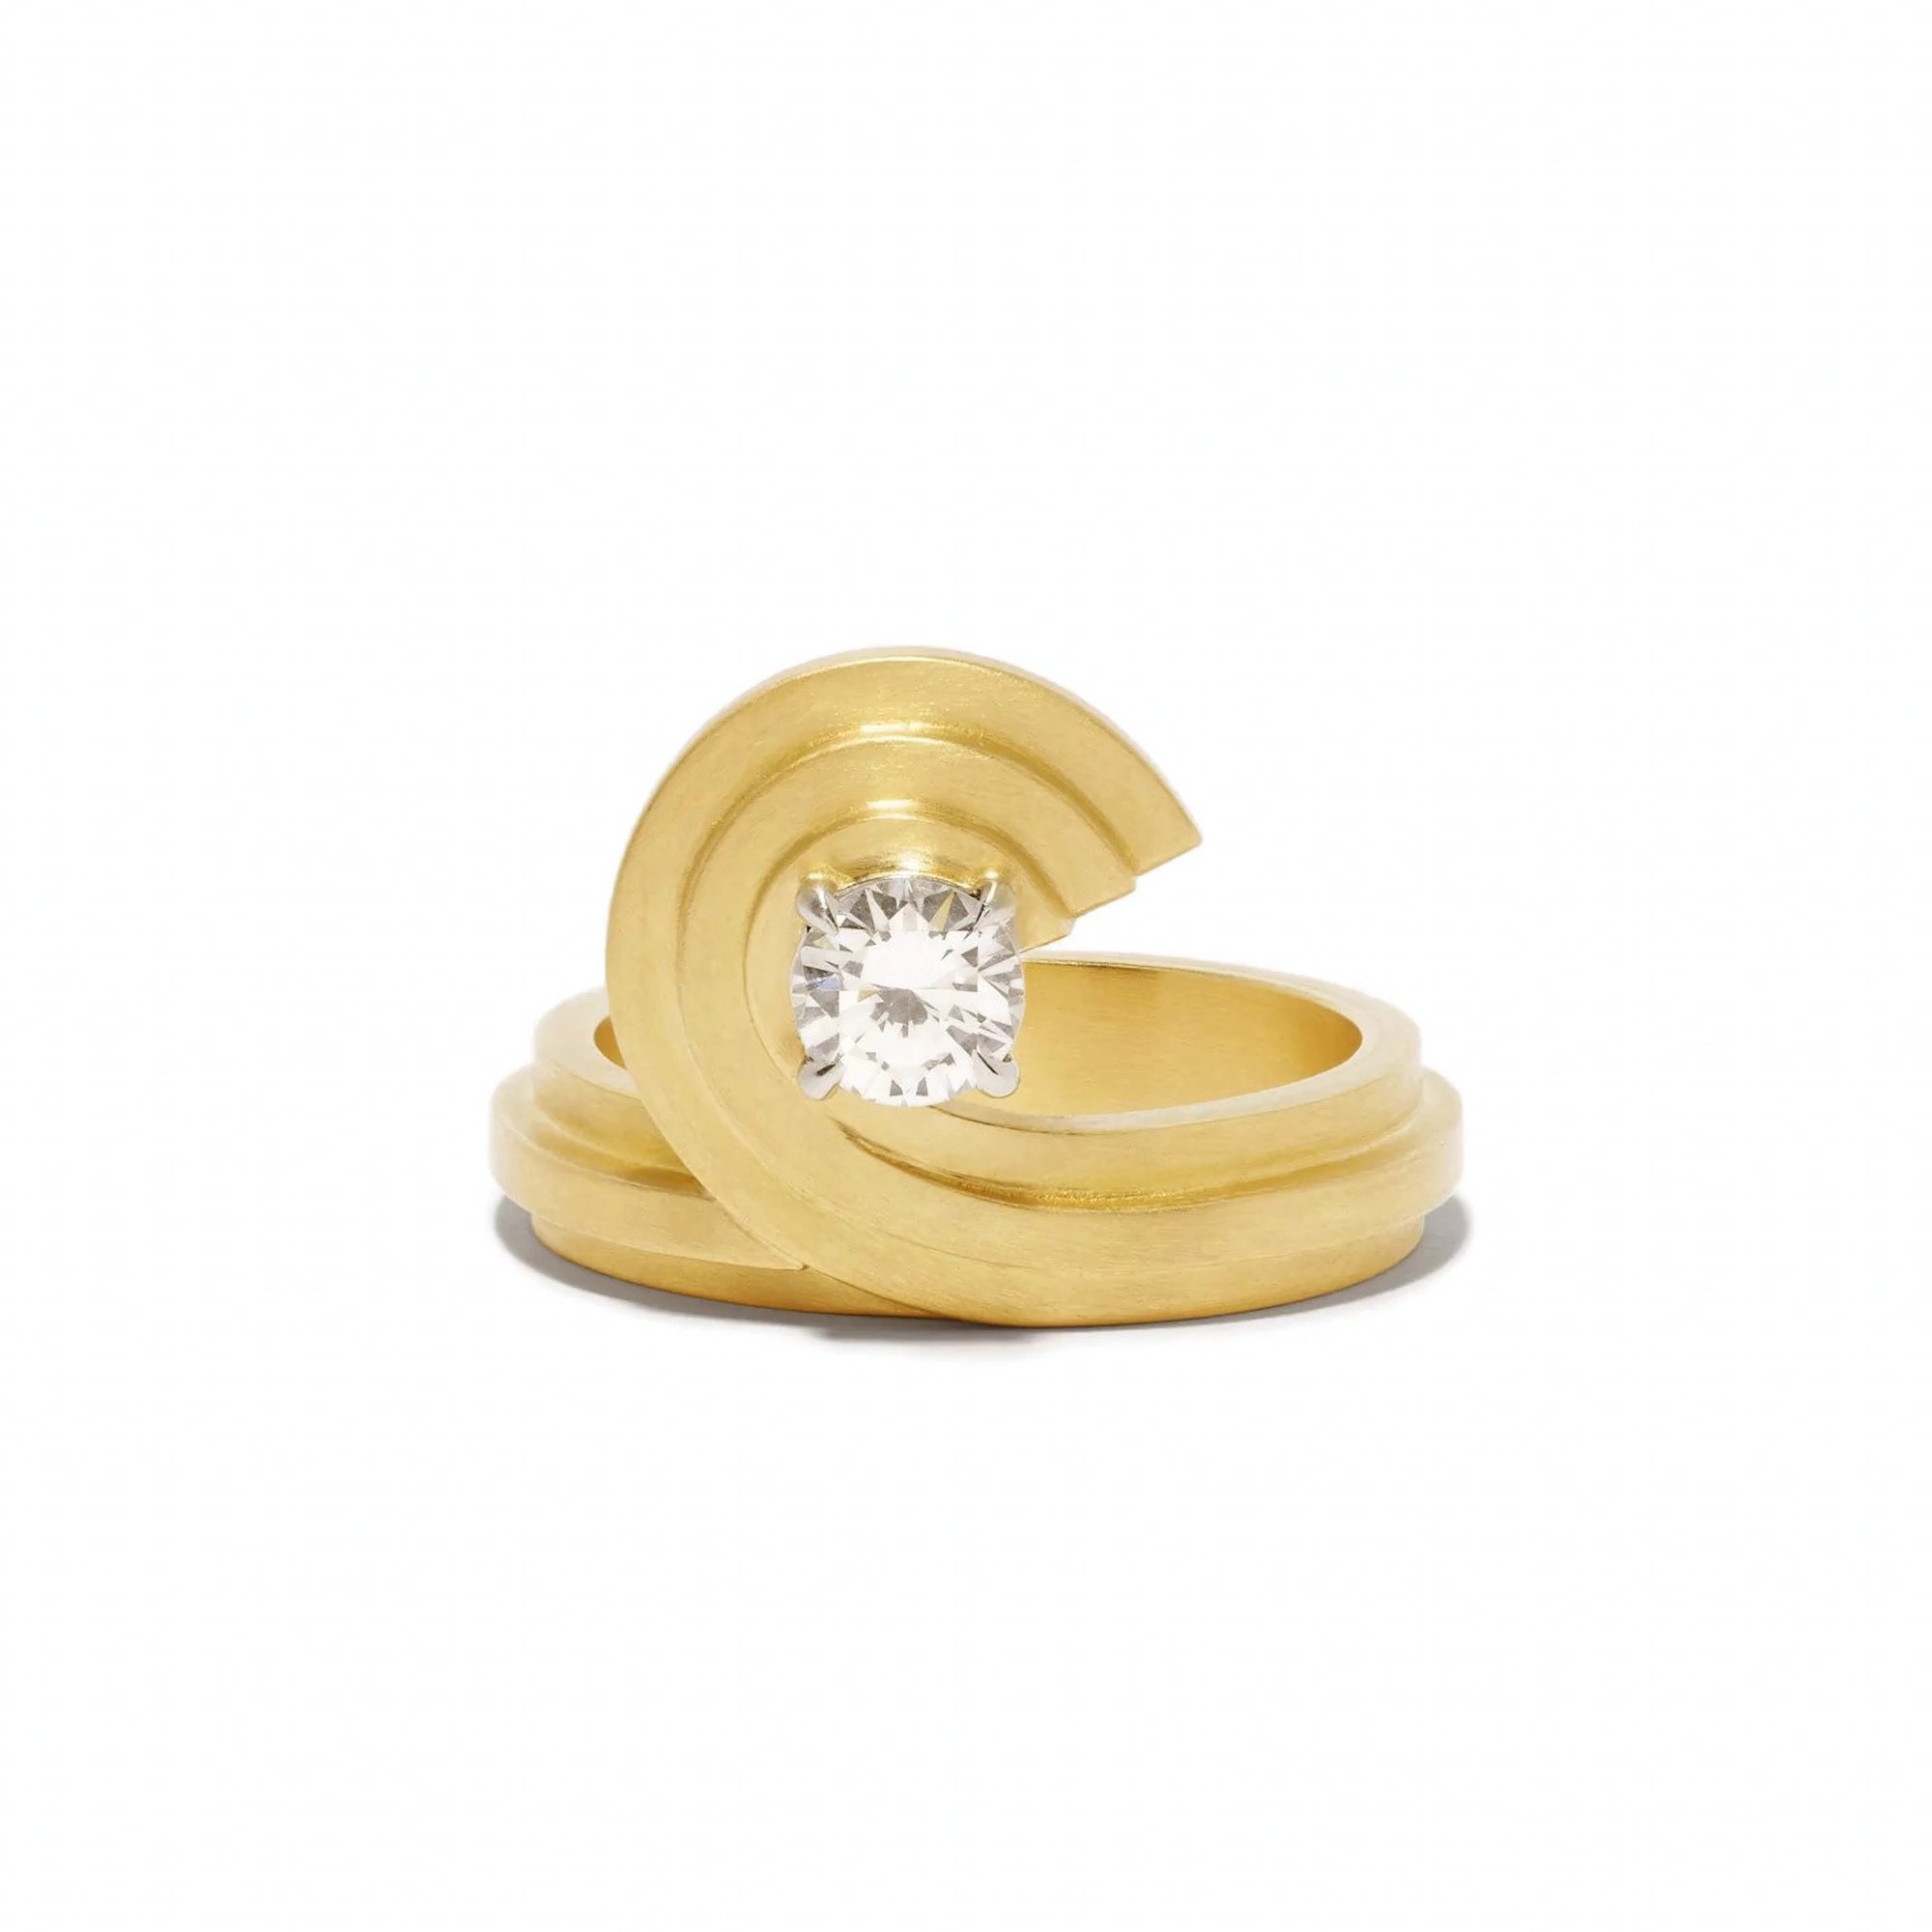 "Sea Ring I", $10,090 at Azlee